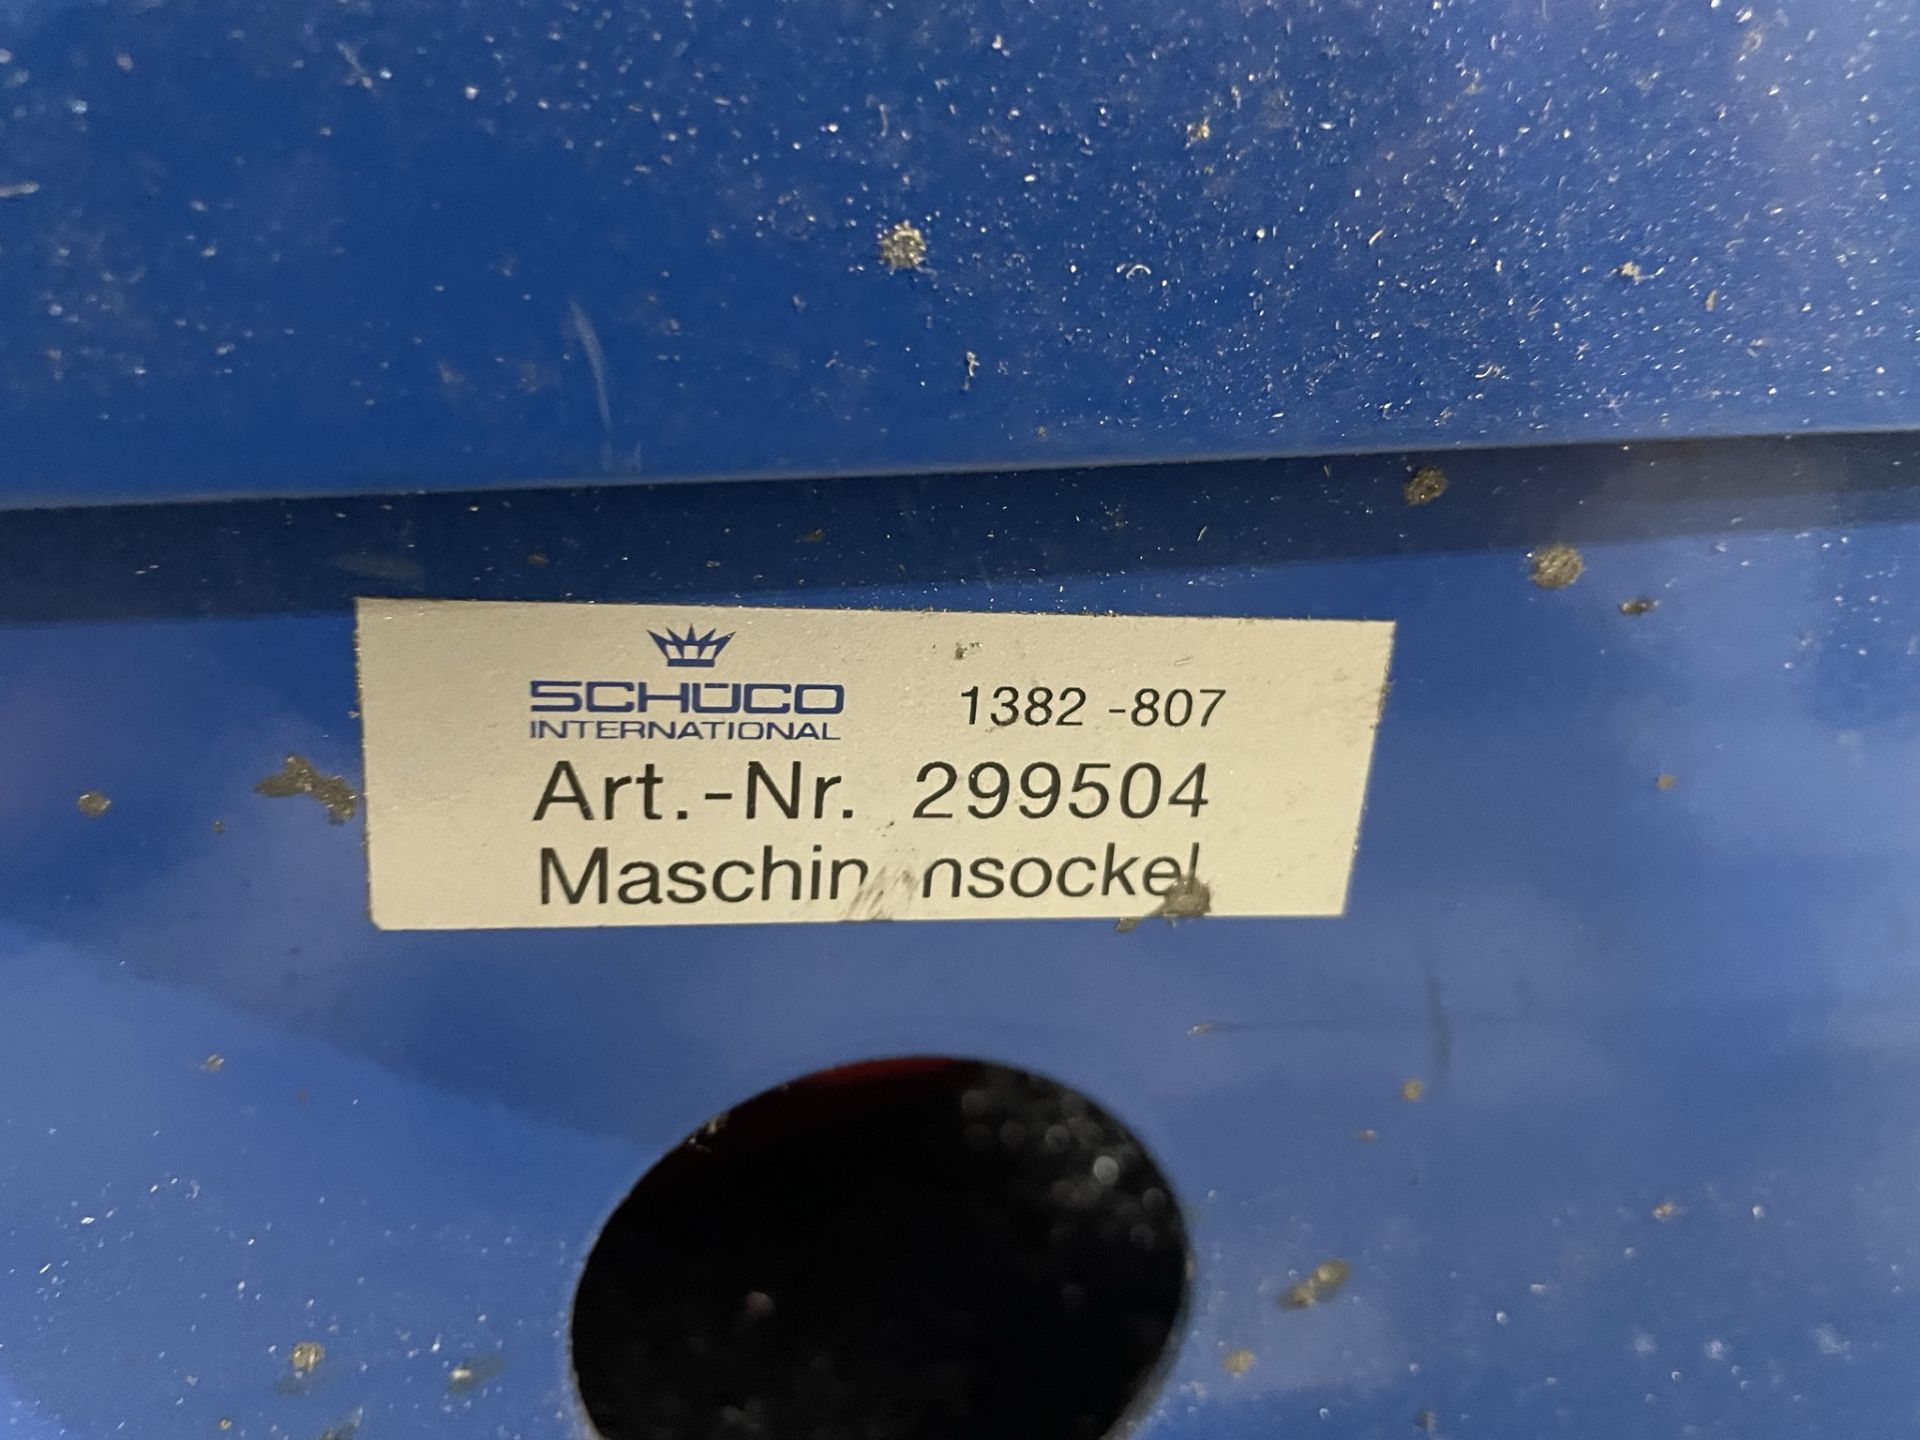 Schuco, 1382-807 pneumatic press, Serial No. 299504 - Bild 3 aus 3